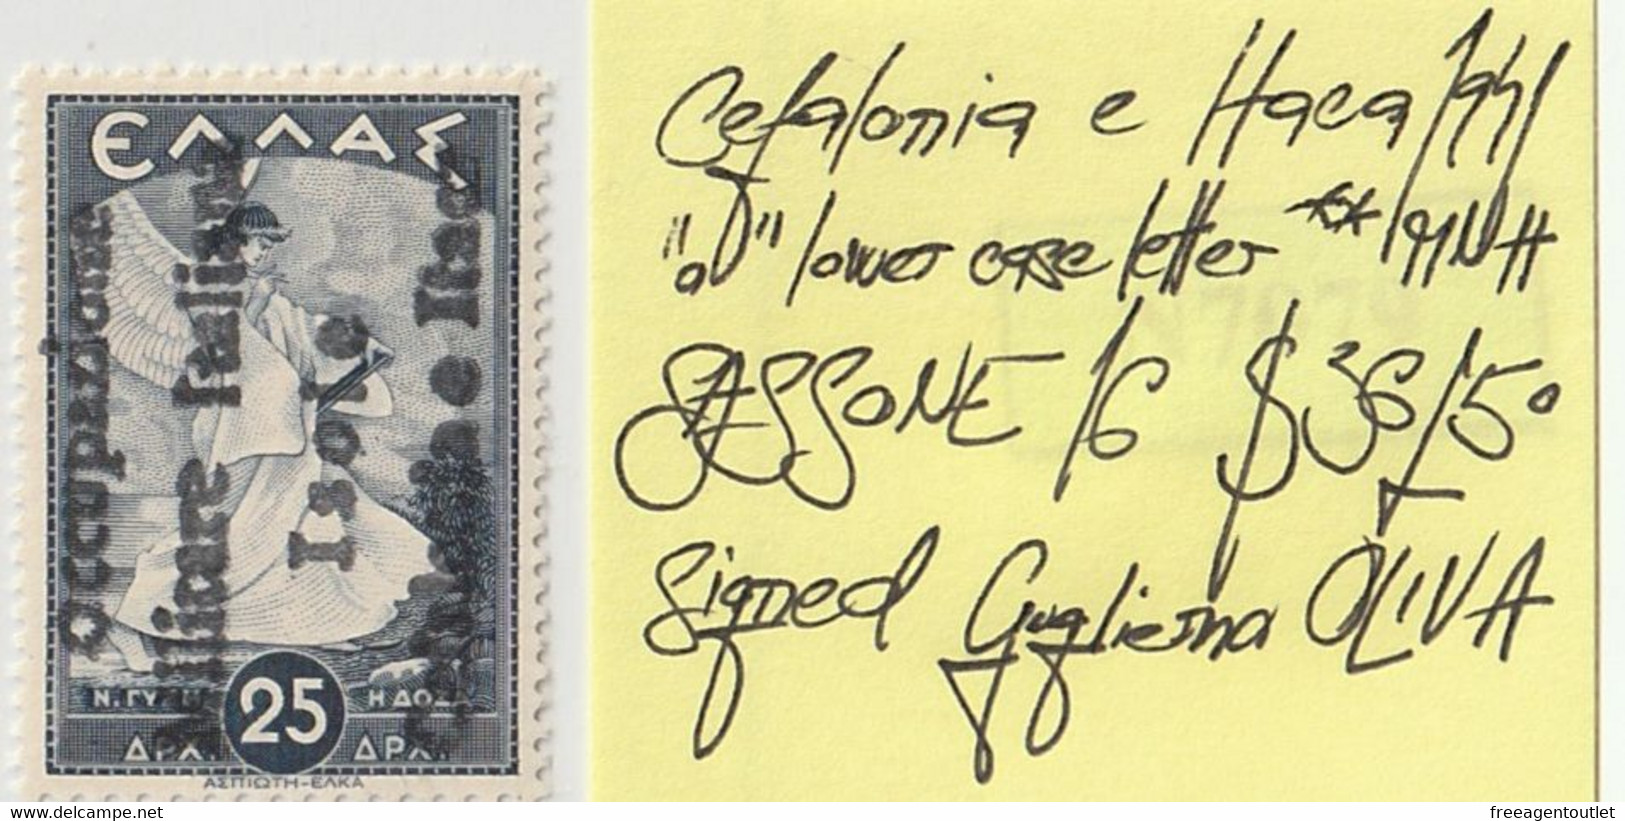 Cefalonia E Itaca - 1941 - 25 D. - MNH** - "o" Lower Case Letter - WW2 - Signed G. Oliva - CV 36250 € / Italian Occupy - Cefalonia & Itaca